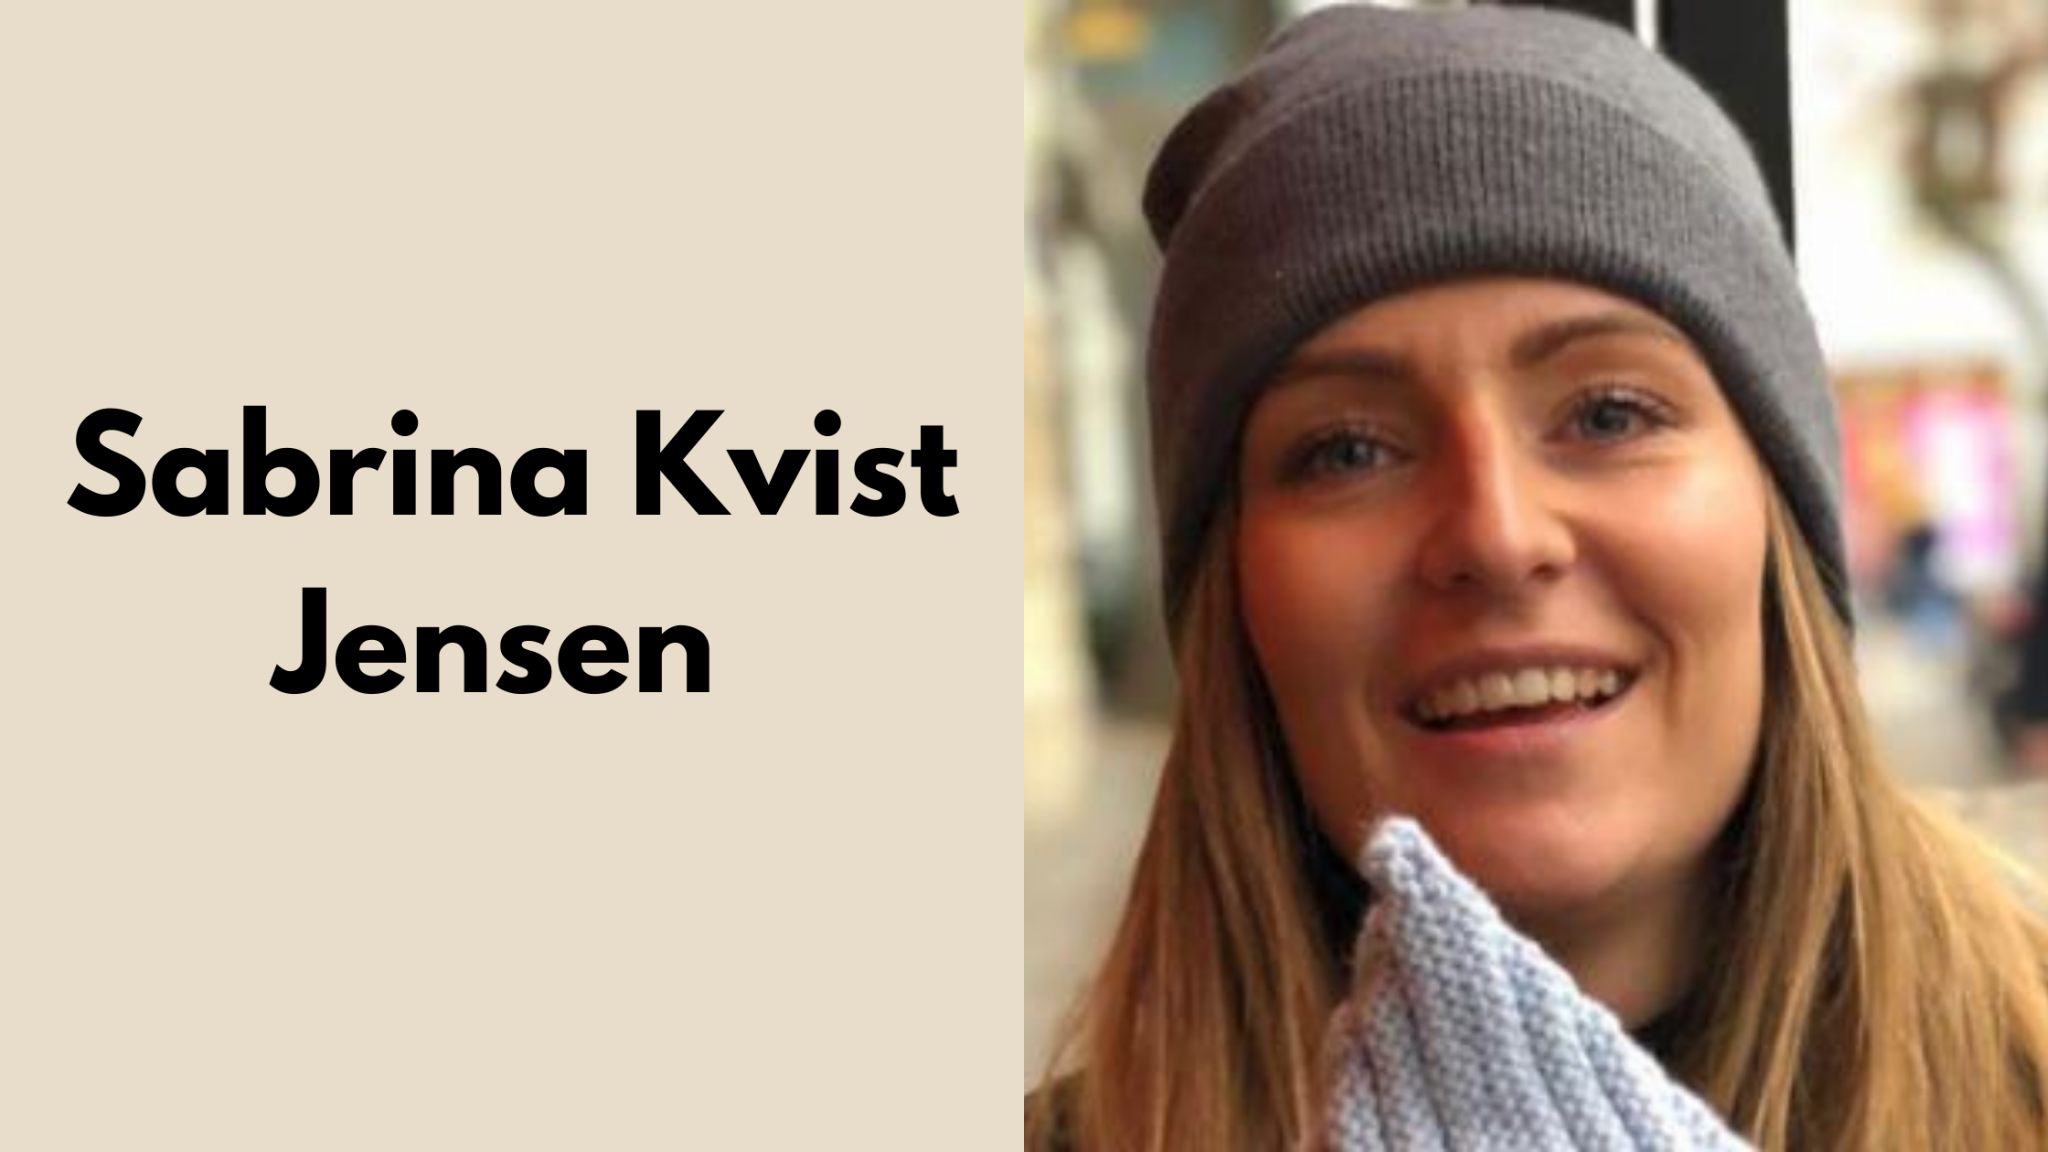 Sabrina Kvist Jensen